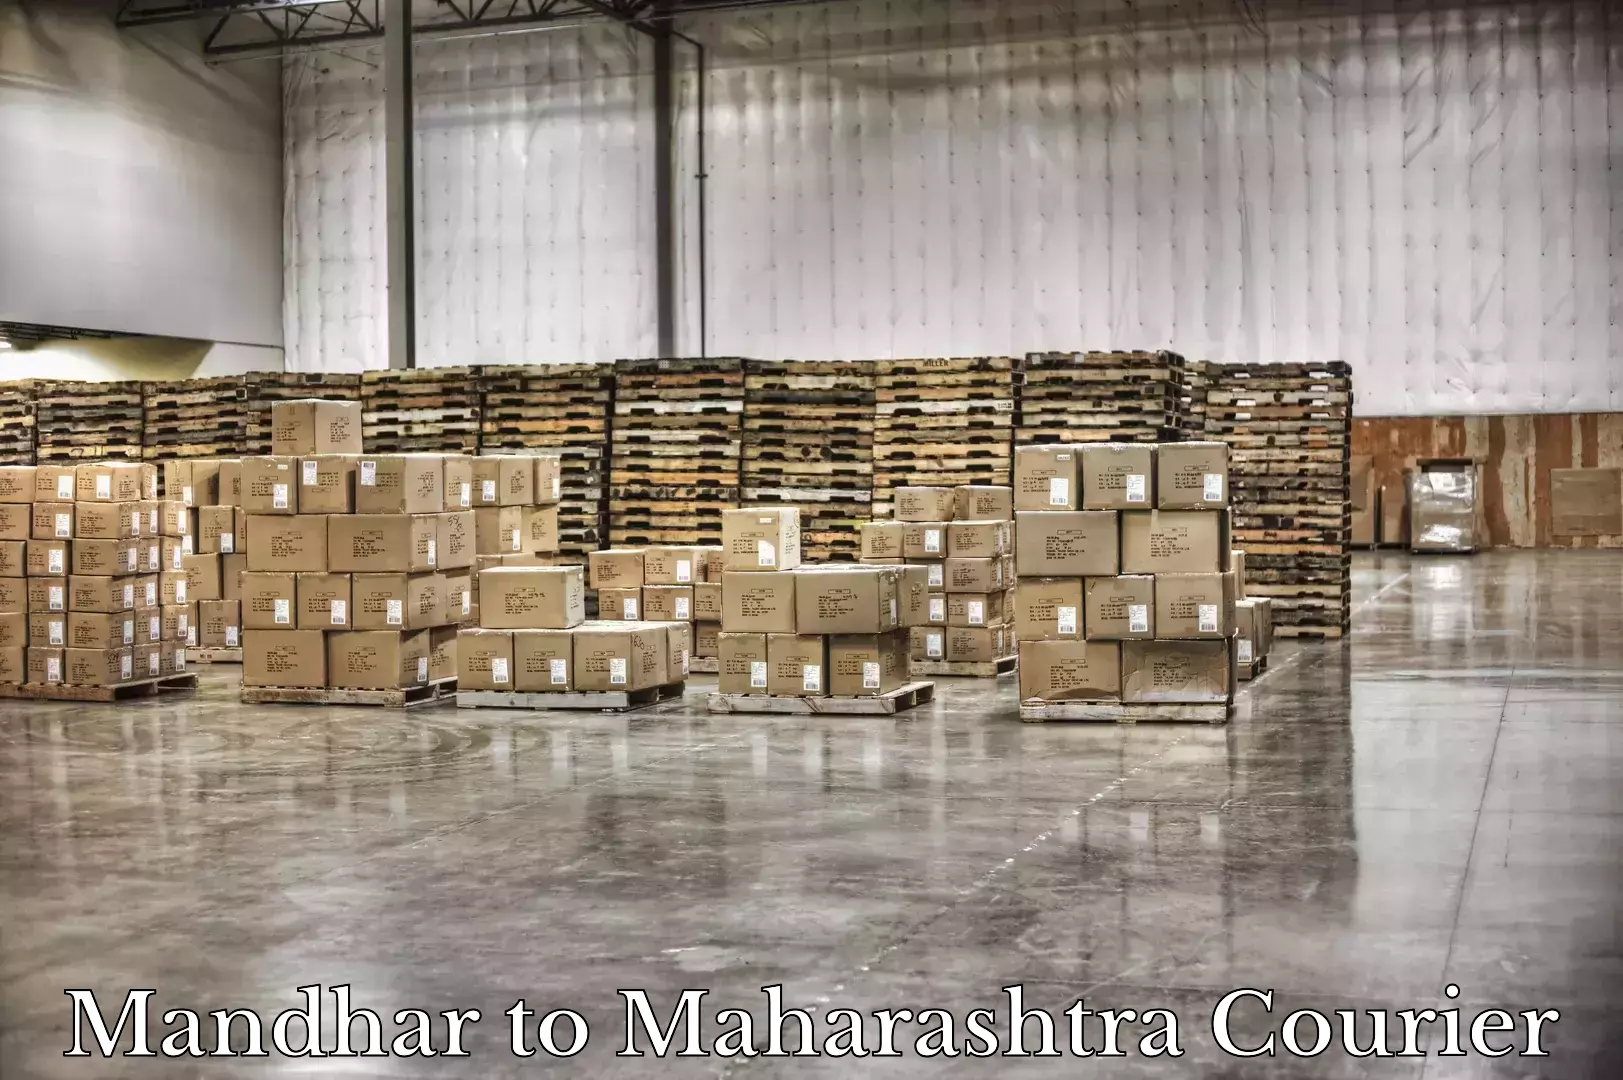 Baggage relocation service in Mandhar to Ballarpur